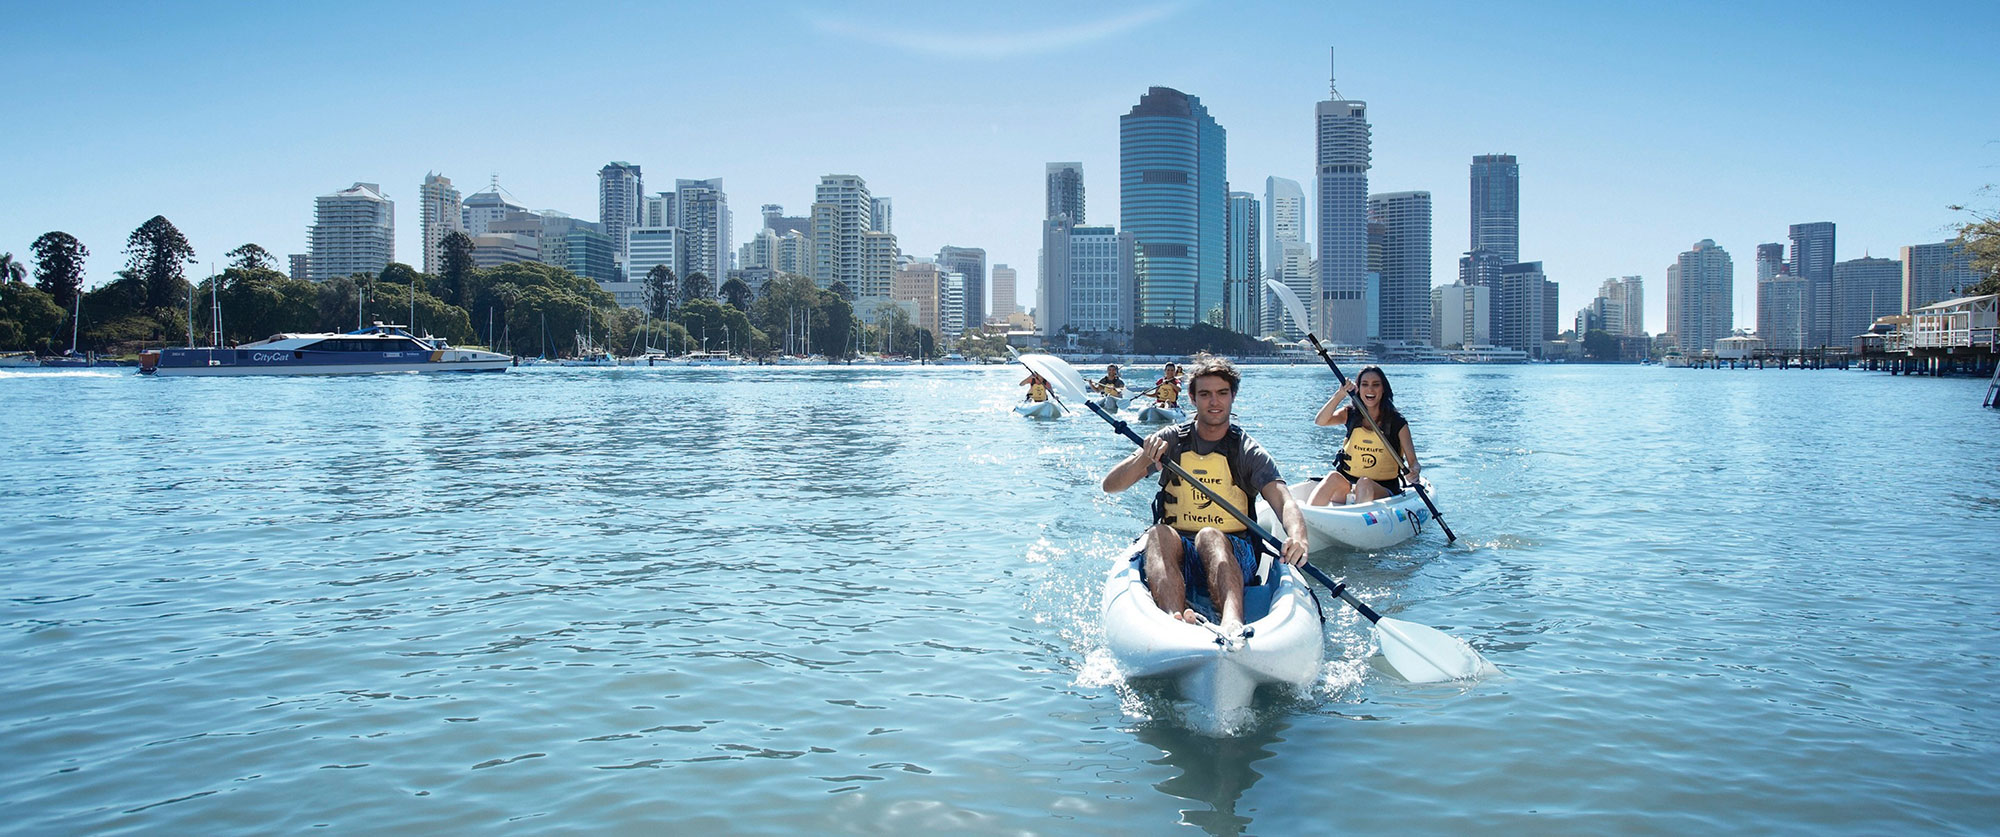 Best Travel Agency - Riverlife in Brisbane Australia